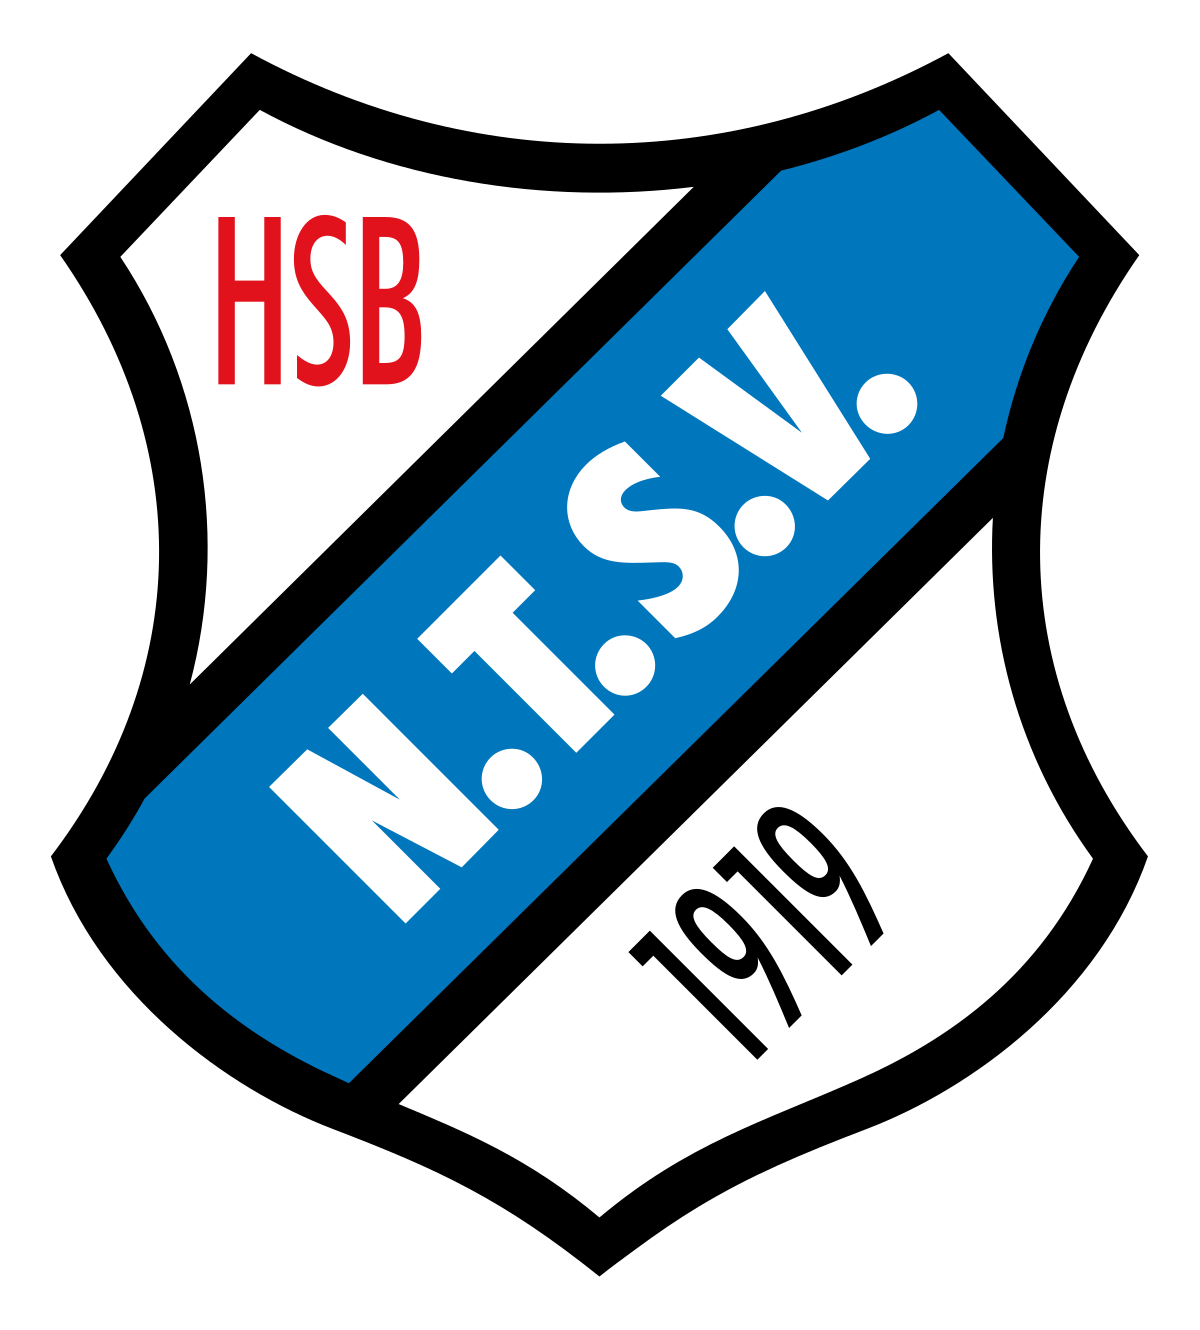 Wappen Niendorfer TSV 1919 diverse